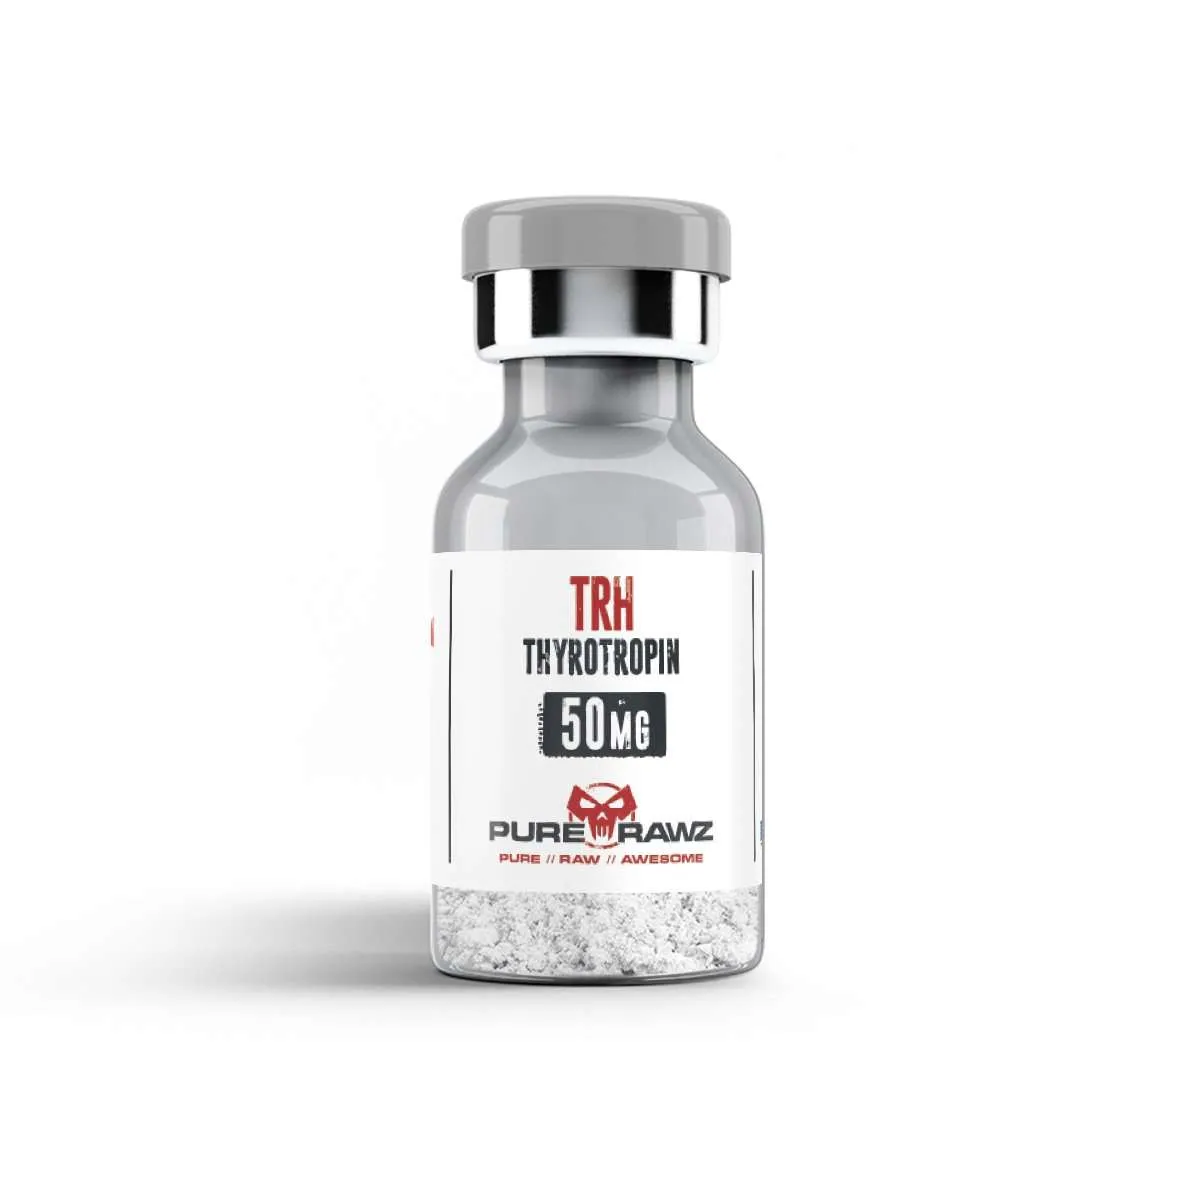 TRH Thyrotropin (Protirelin) Peptide